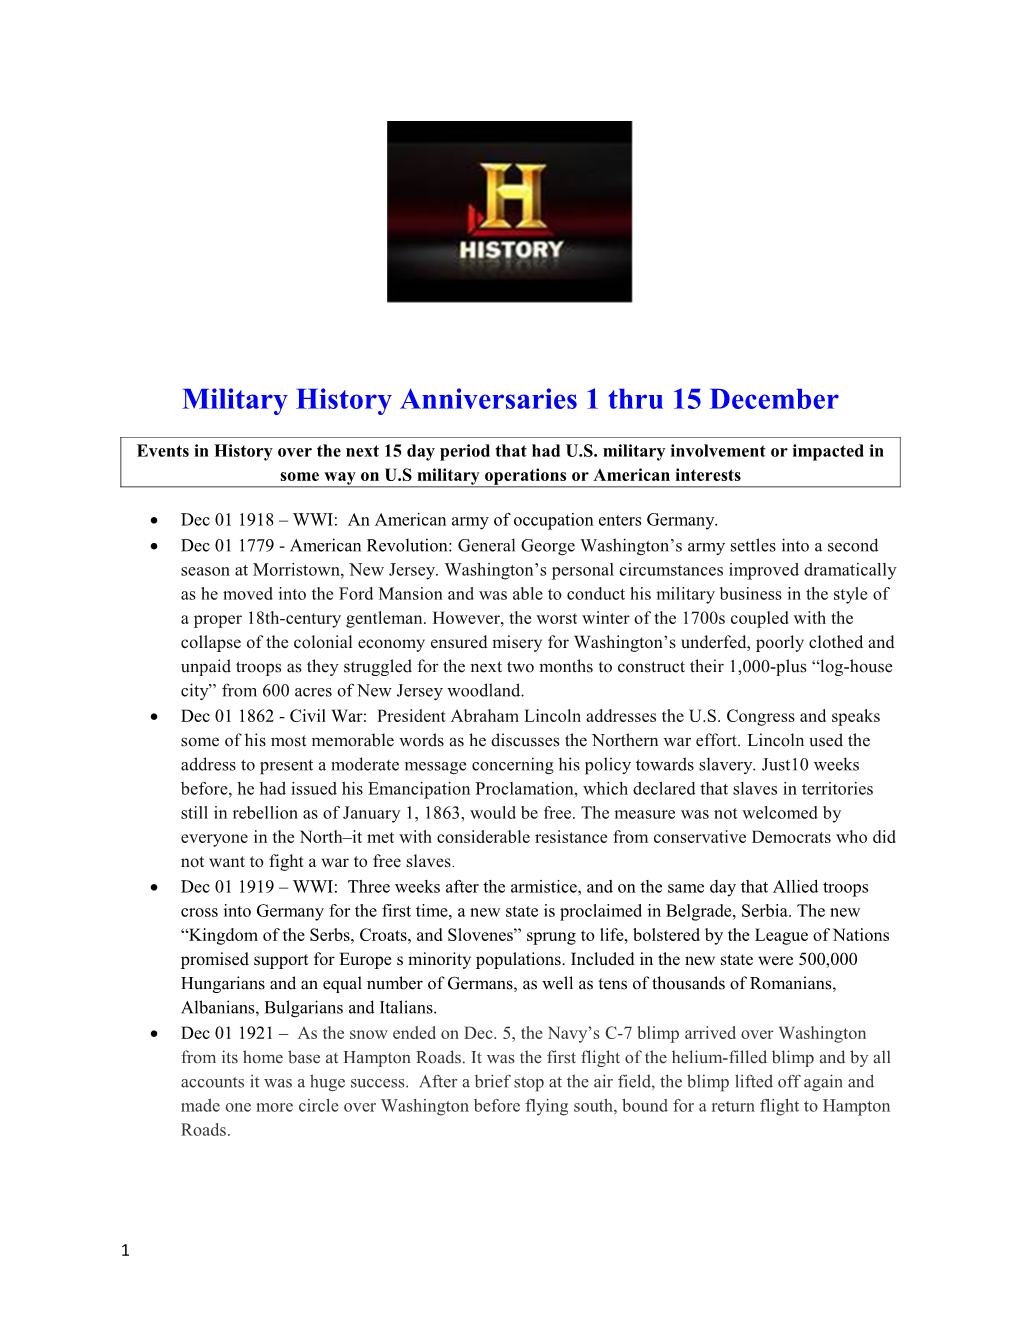 Military History Anniversaries 1 Thru 15 December